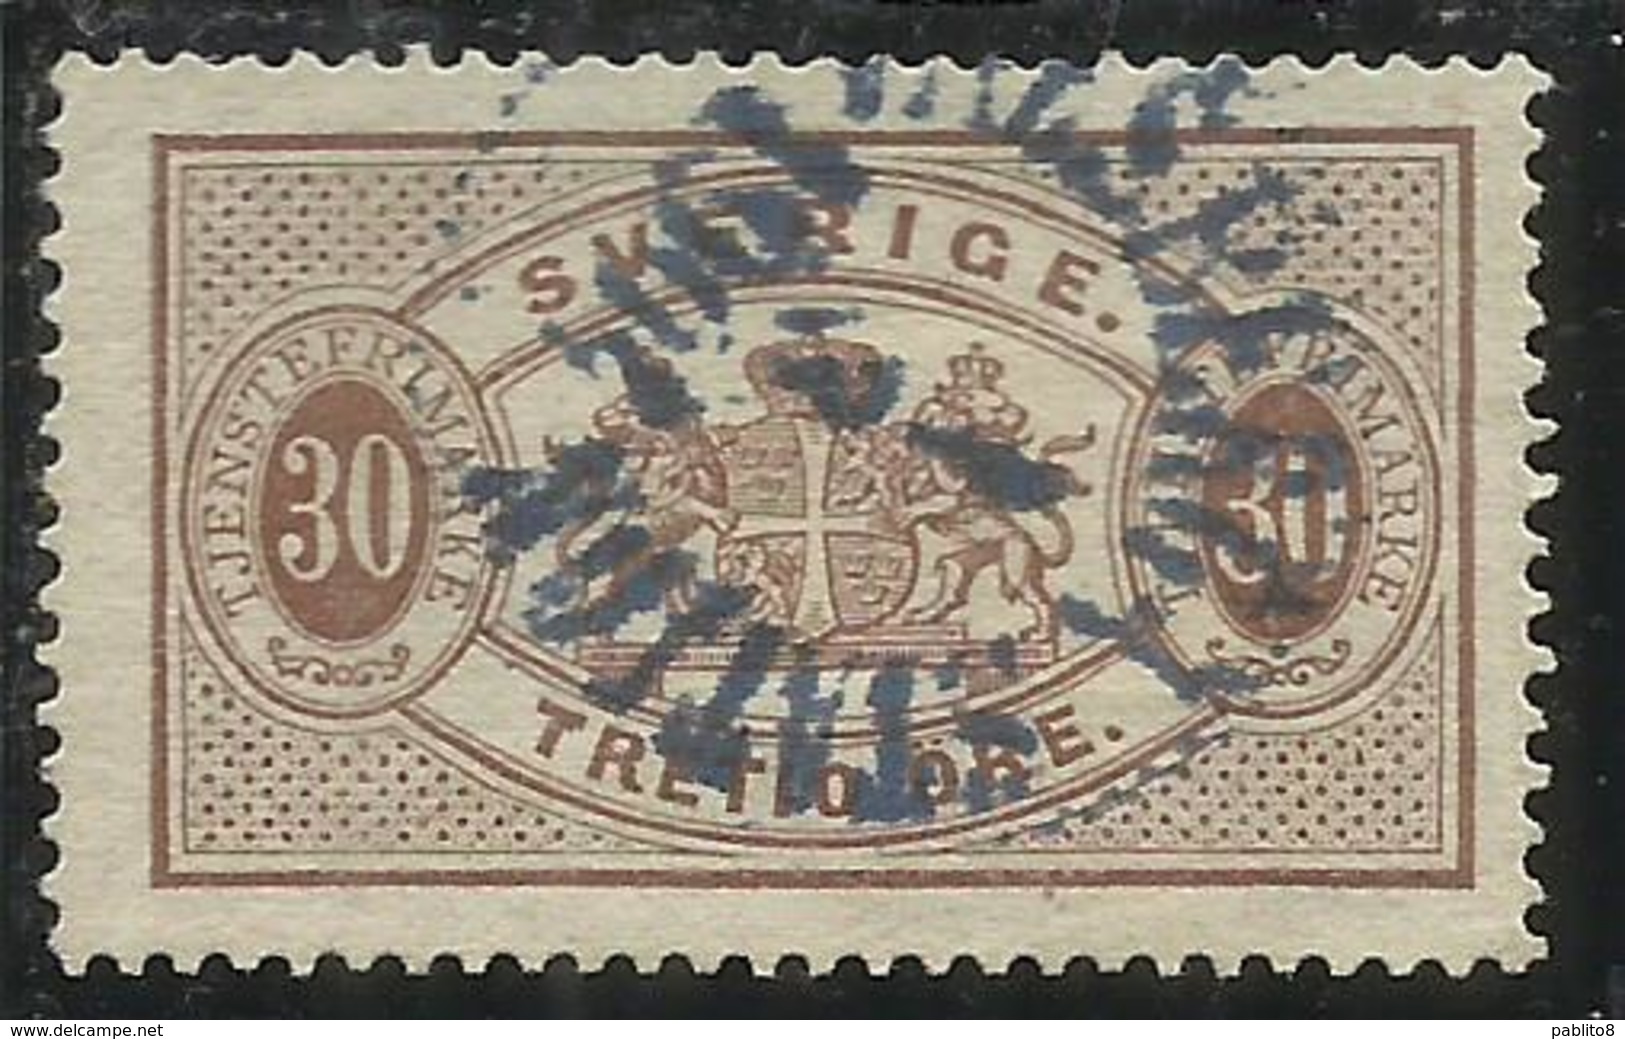 SWEDEN SVERIGE SVEZIA SUEDE 1874 1877 OFFICIAL STAMPS ORE 30o USATO USED OBLITERE' - Revenue Stamps